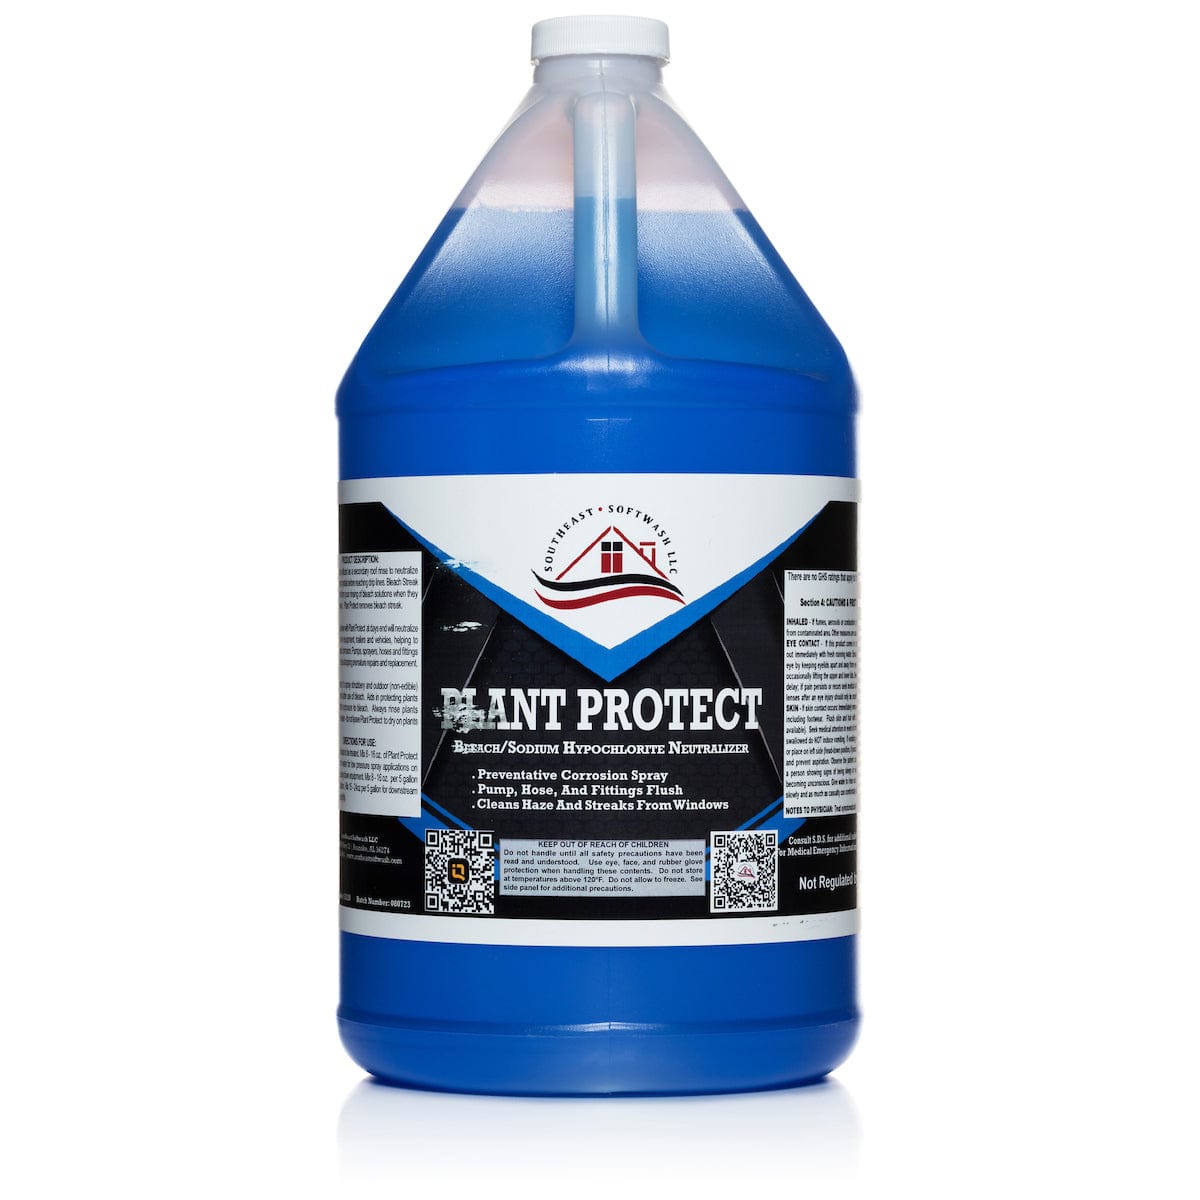 Southeast Softwash Case (4 gallons) Plant Protect-Bleach Neutralizer